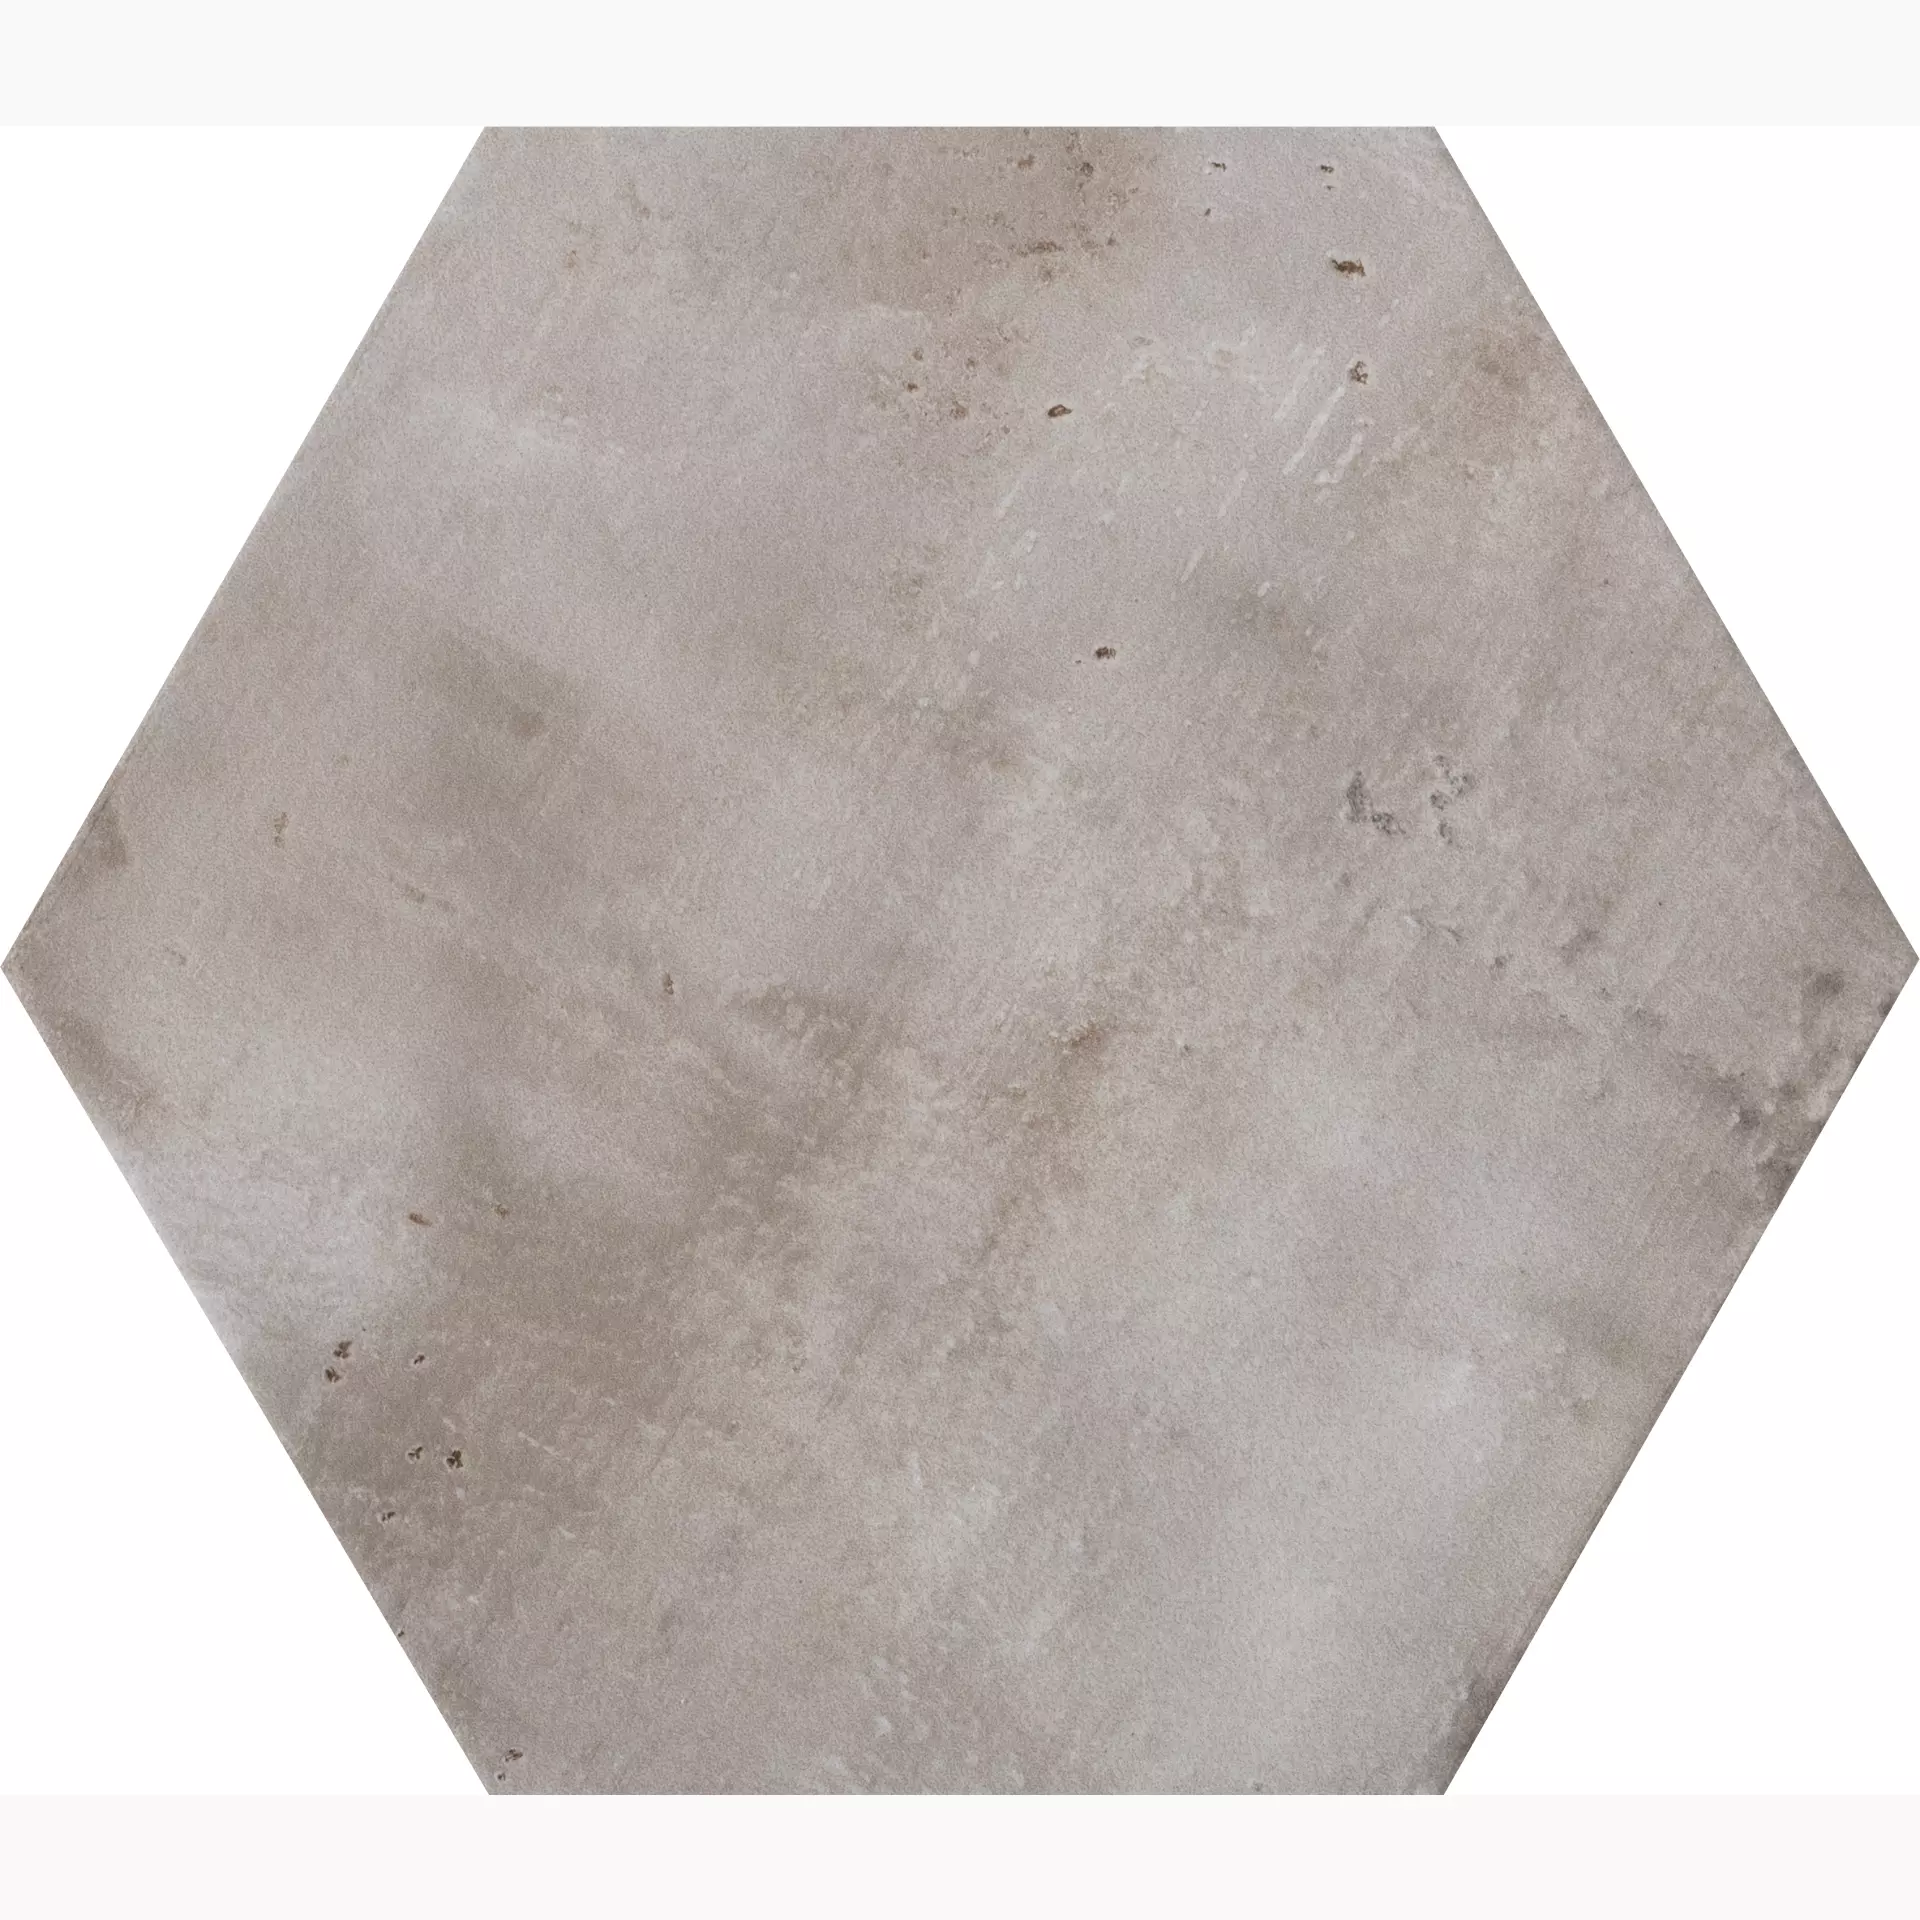 CIR Fuoritono Beige Opaco Hexagon 1072707 24x27,7cm 10mm